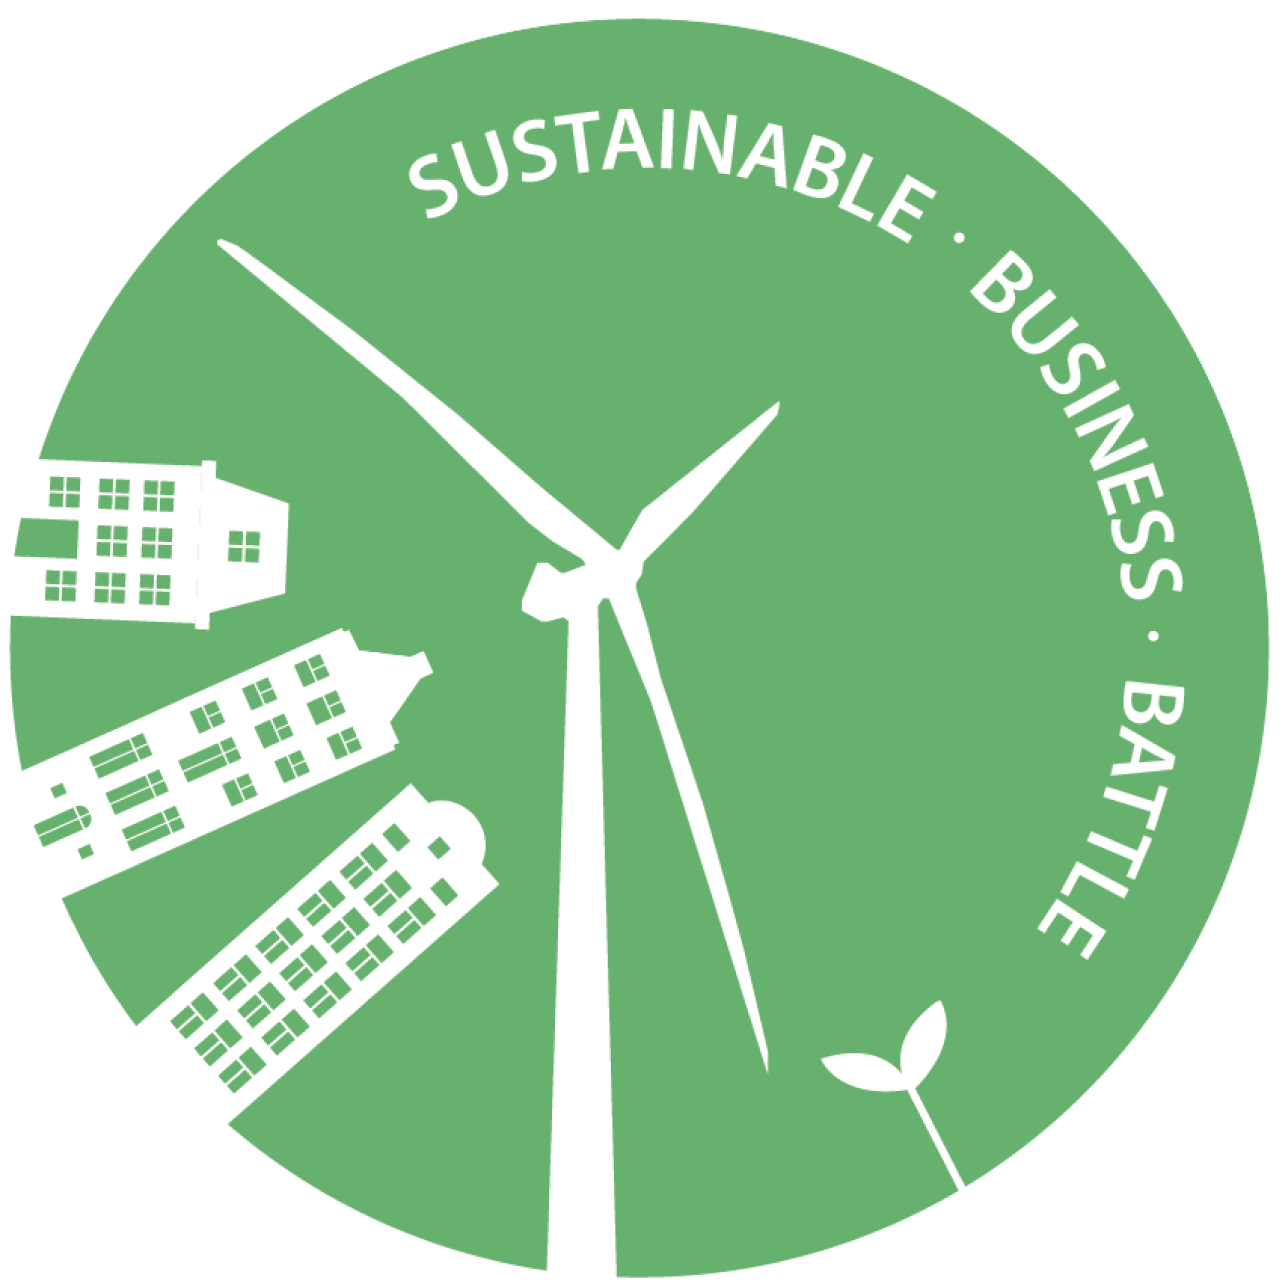 Sustainable Business Battle